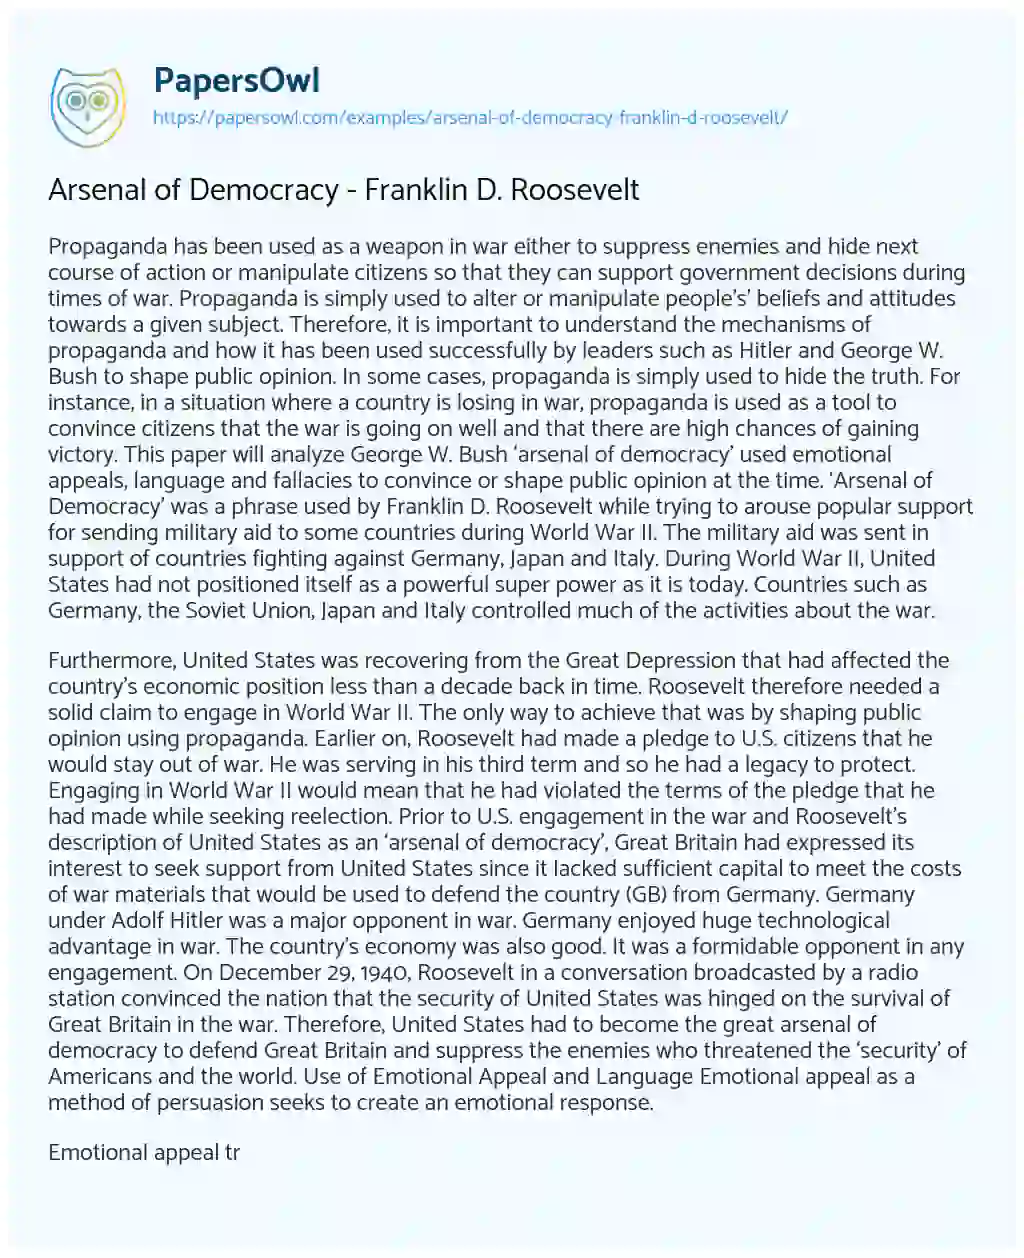 Essay on Arsenal of Democracy – Franklin D. Roosevelt